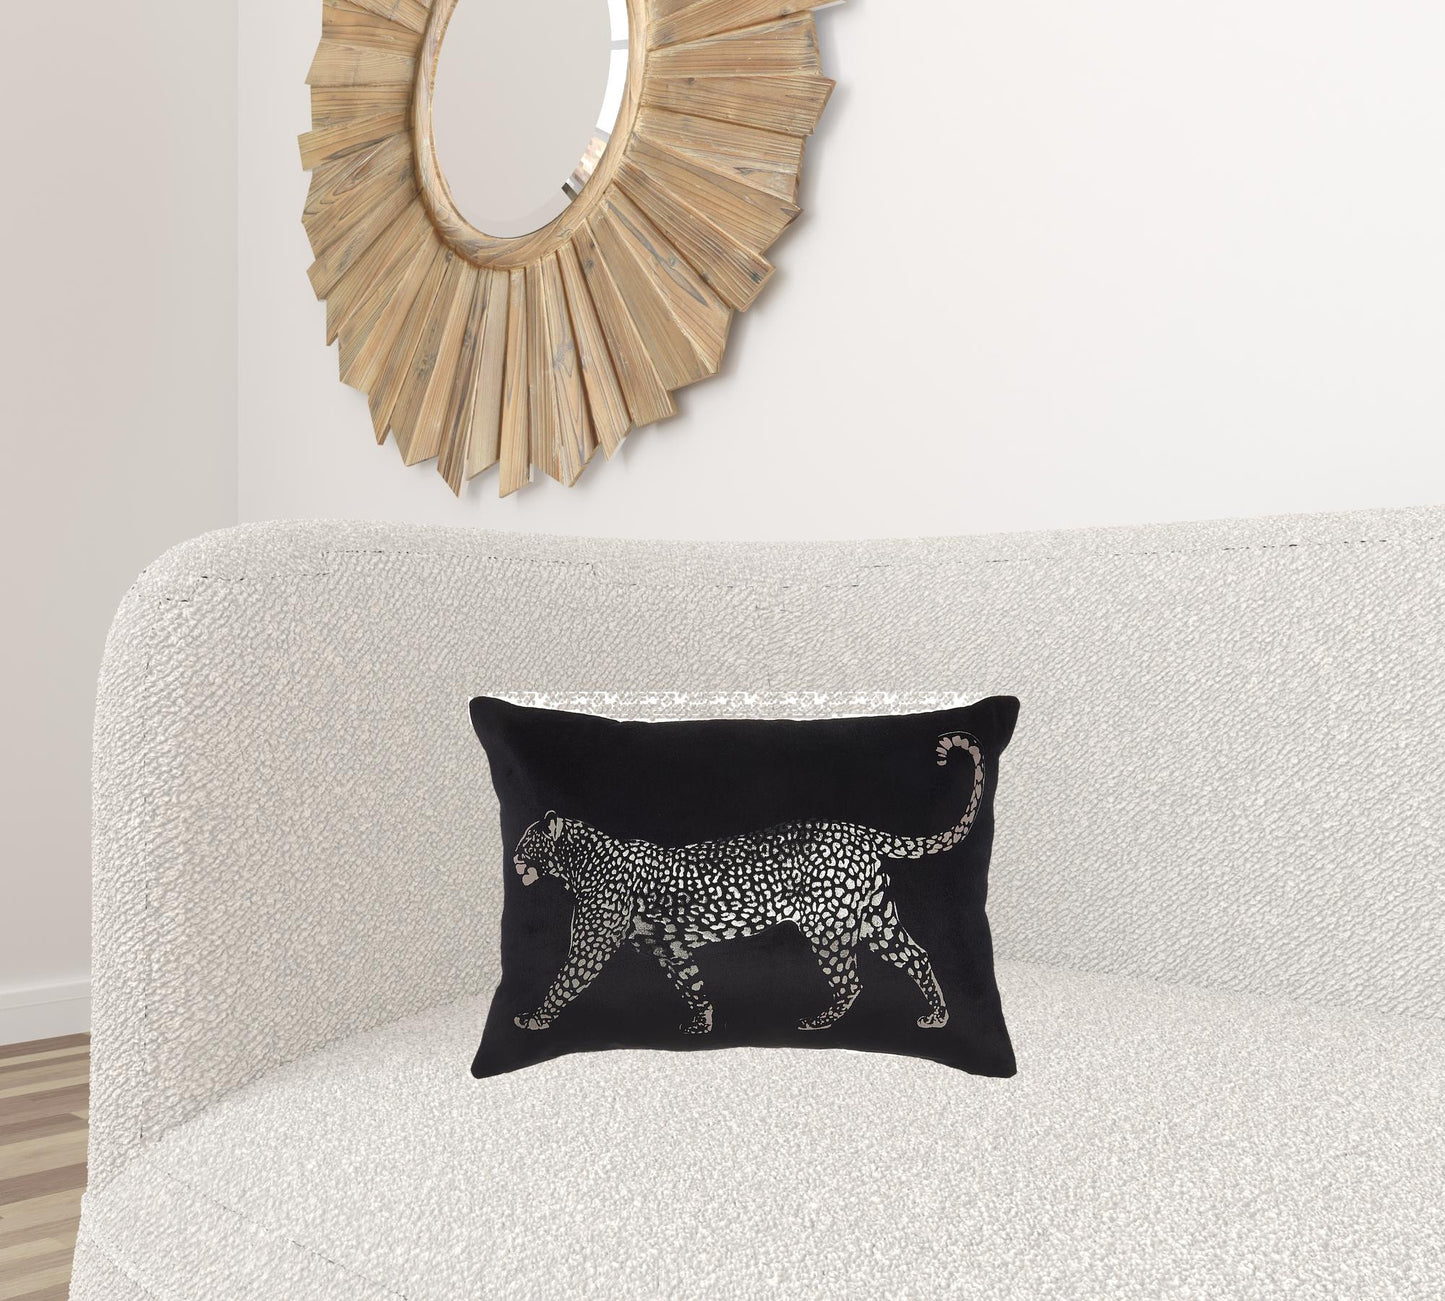 Black Leopard Lumbar Pillow